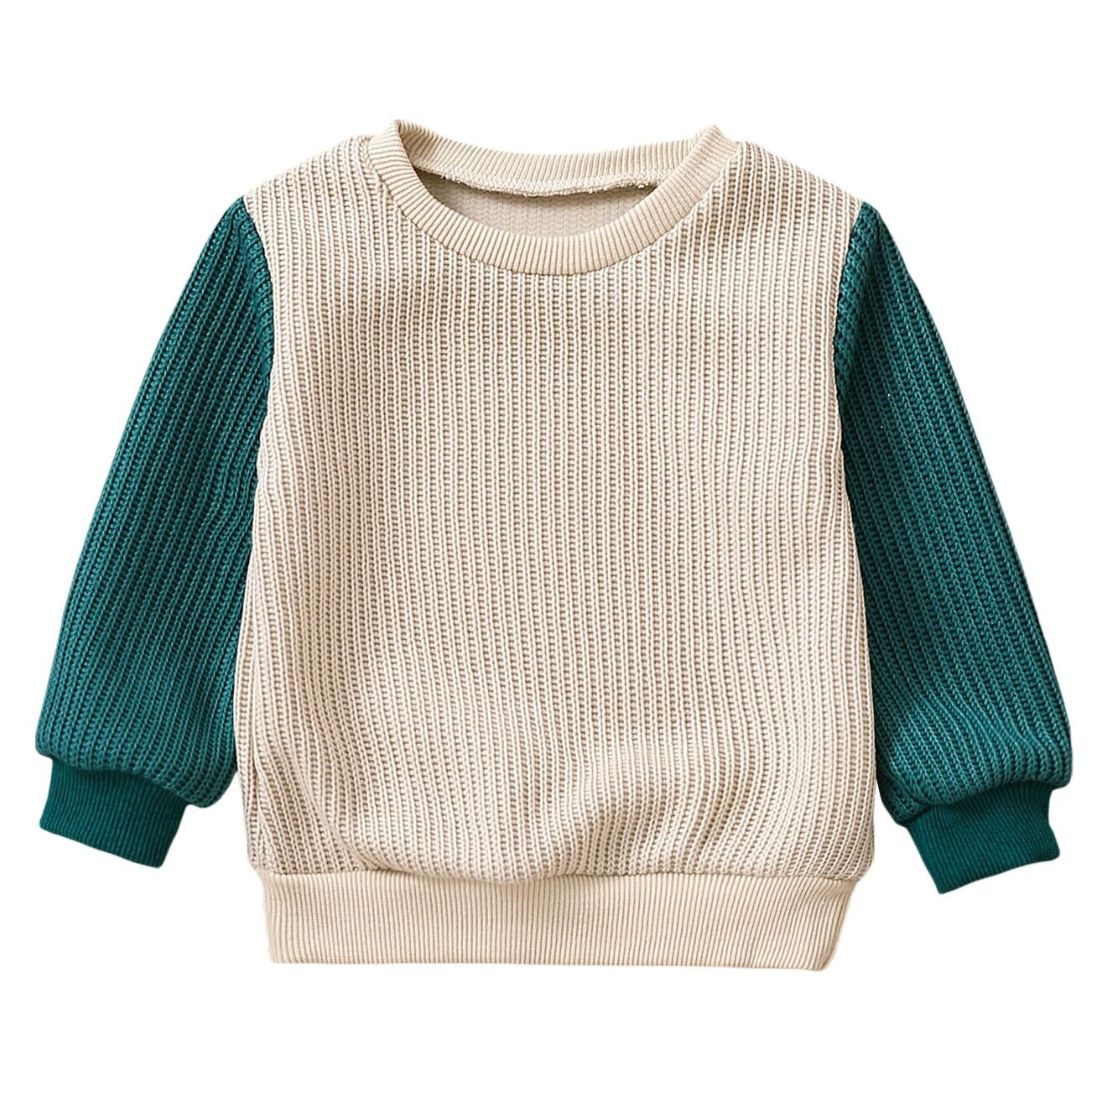 Boston Green Knit Toddler Boys Sweater